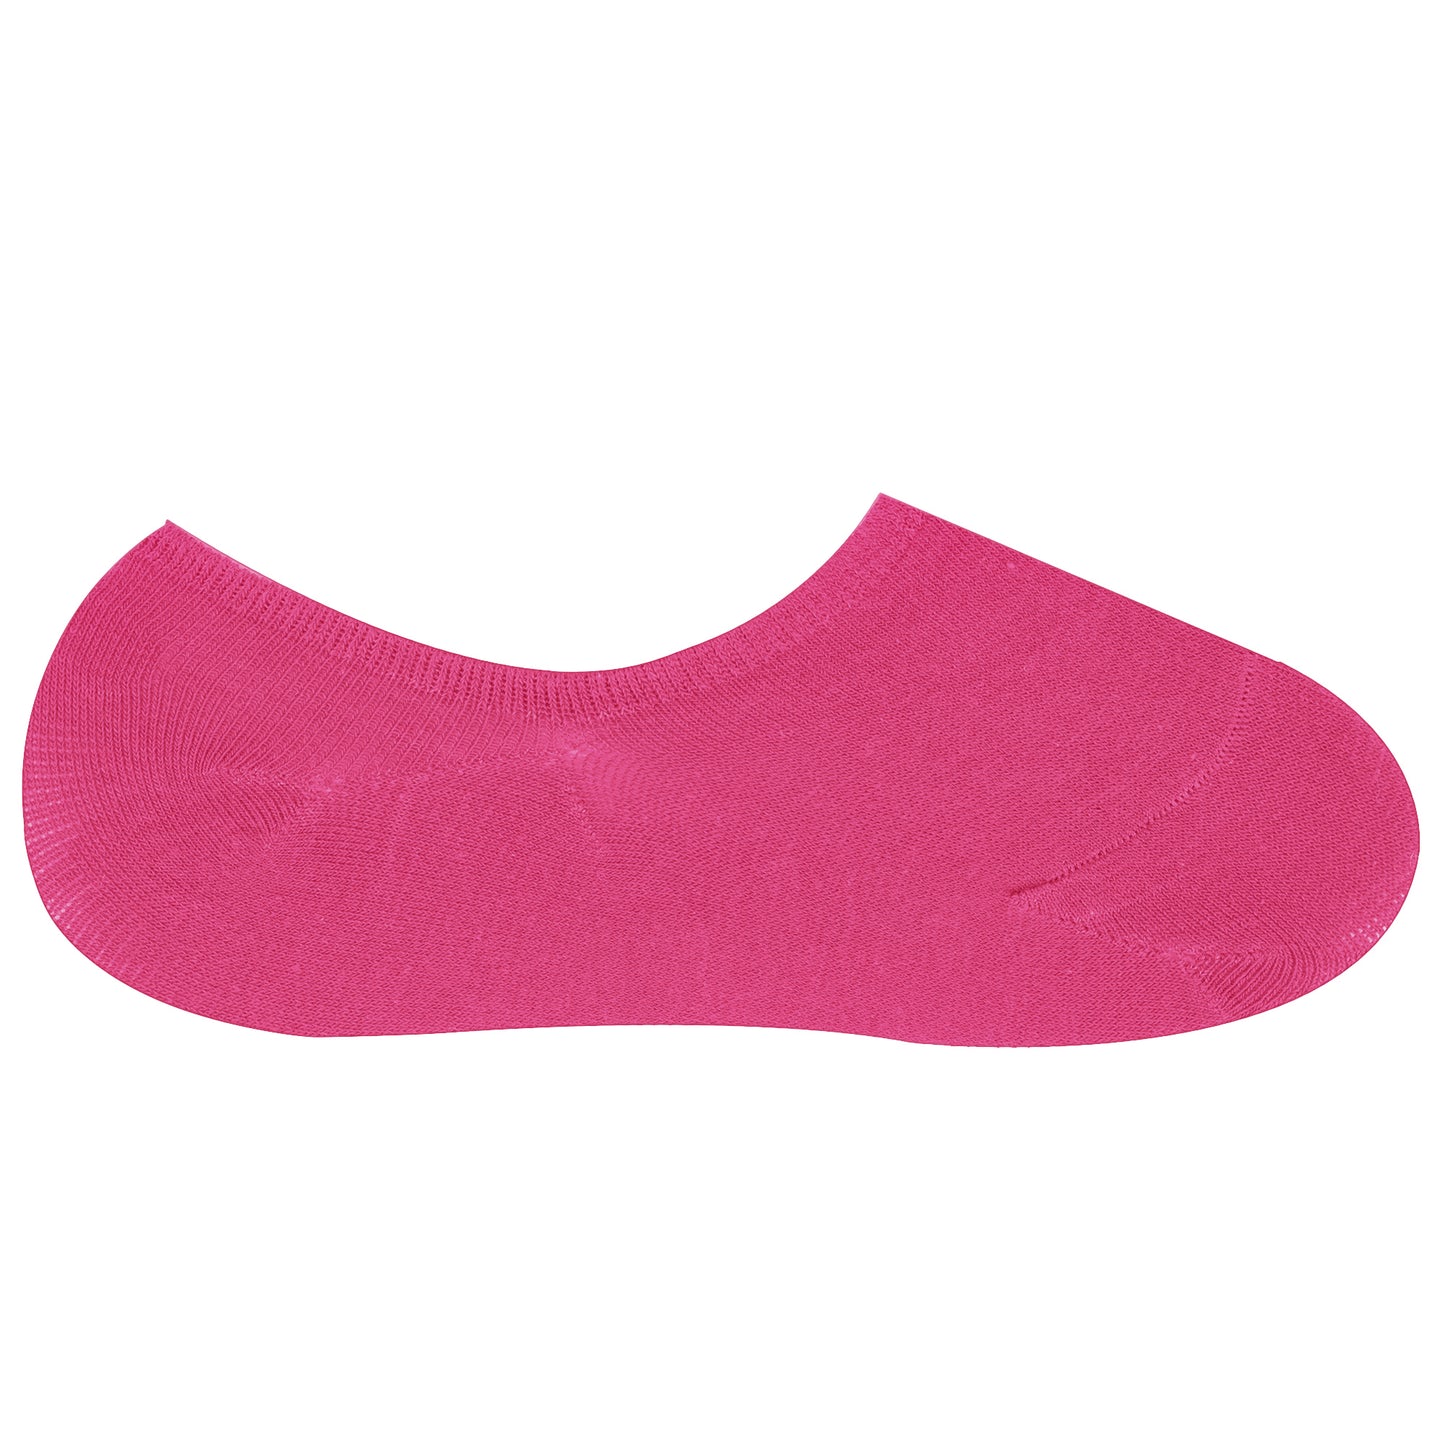 Cotton Hidden Loafer Socks - Dark Pink